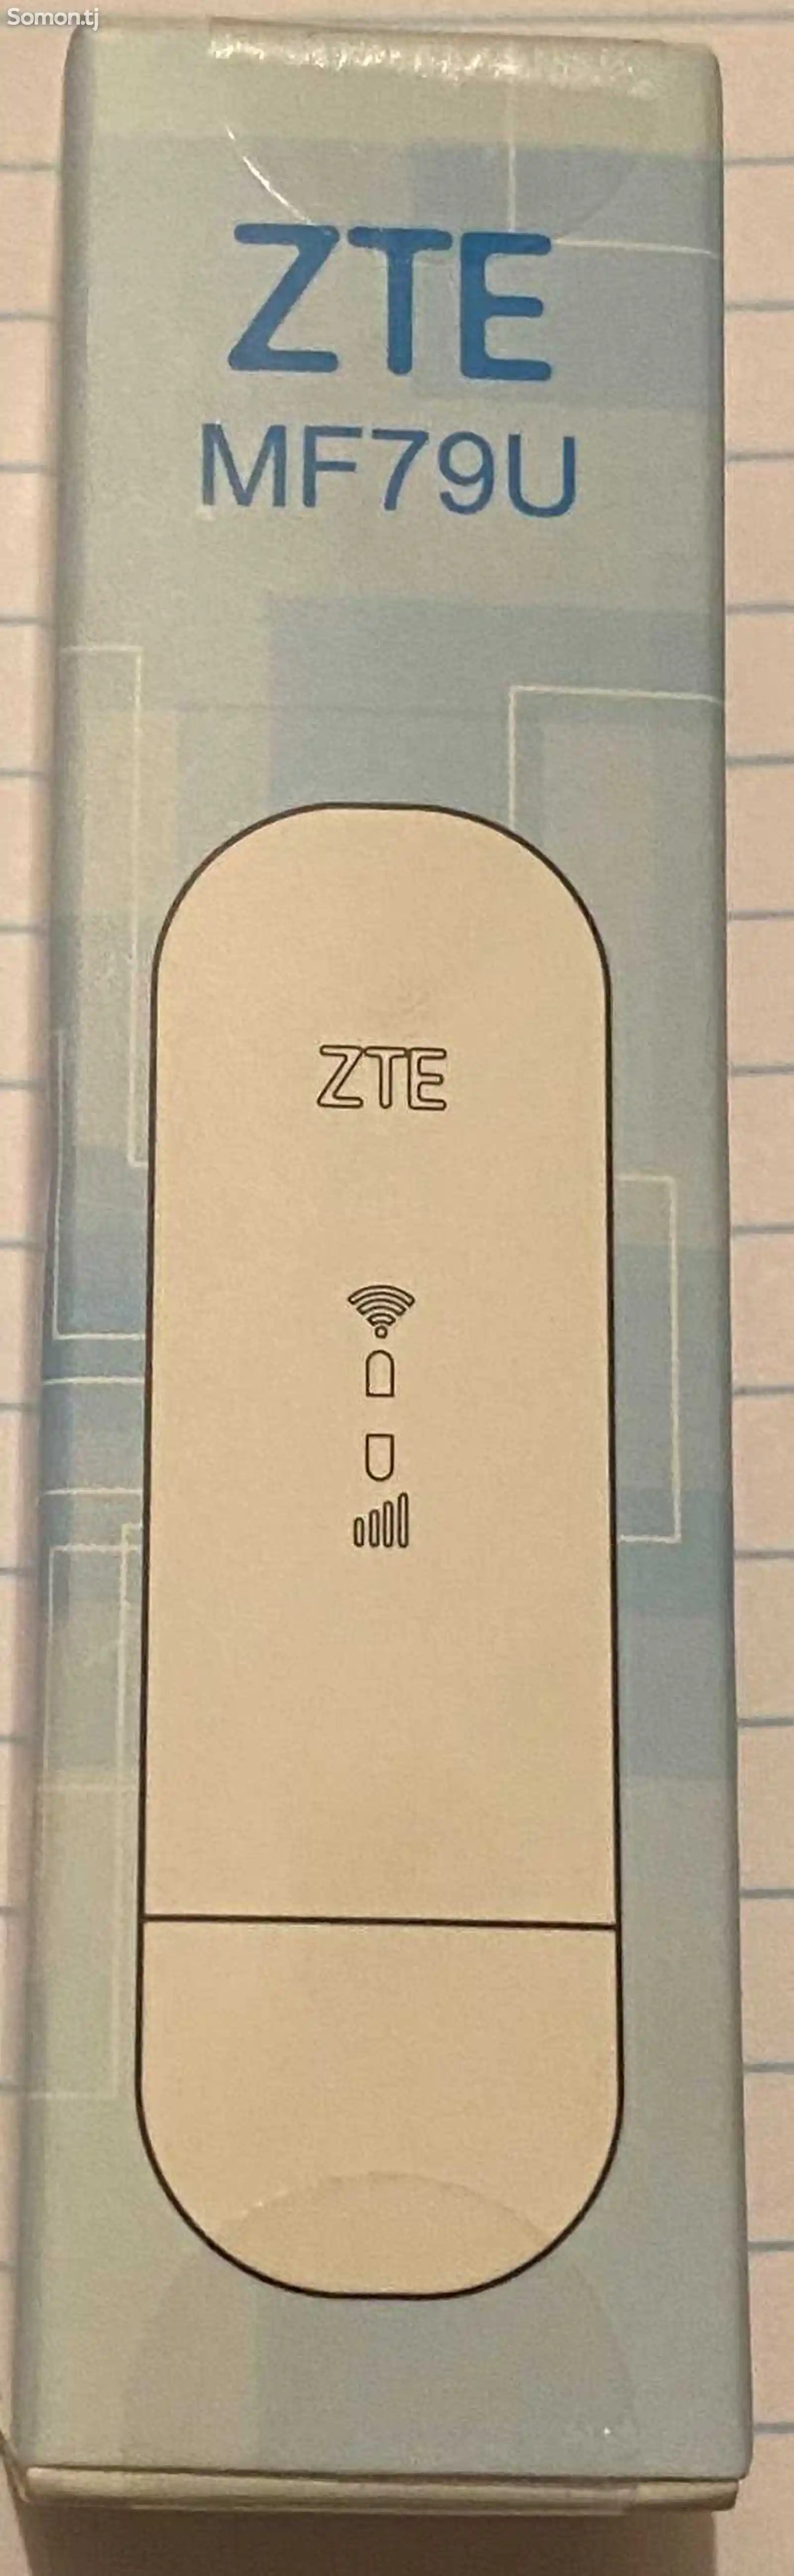 USB 3G/4G модем с WiFi ZTE MF79u-1